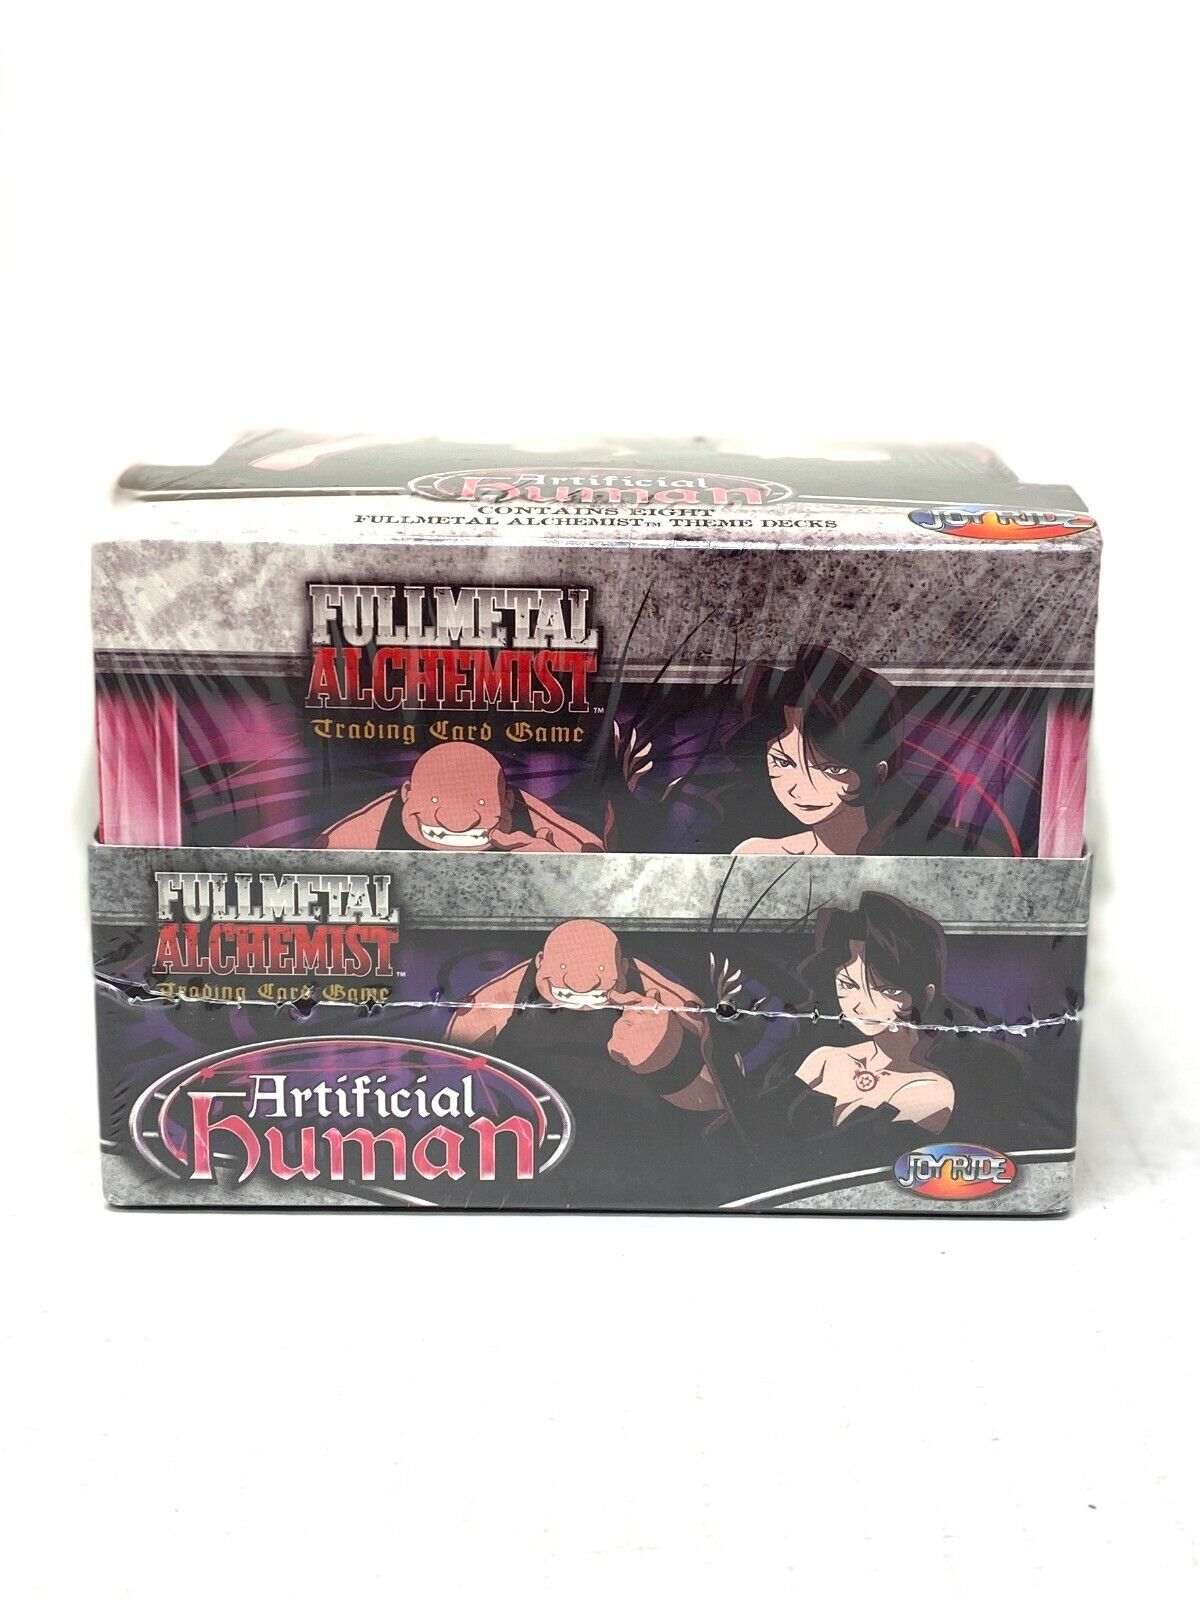 Fullmetal alchemist Trading Card Game: Artificial Human, Sealed Box